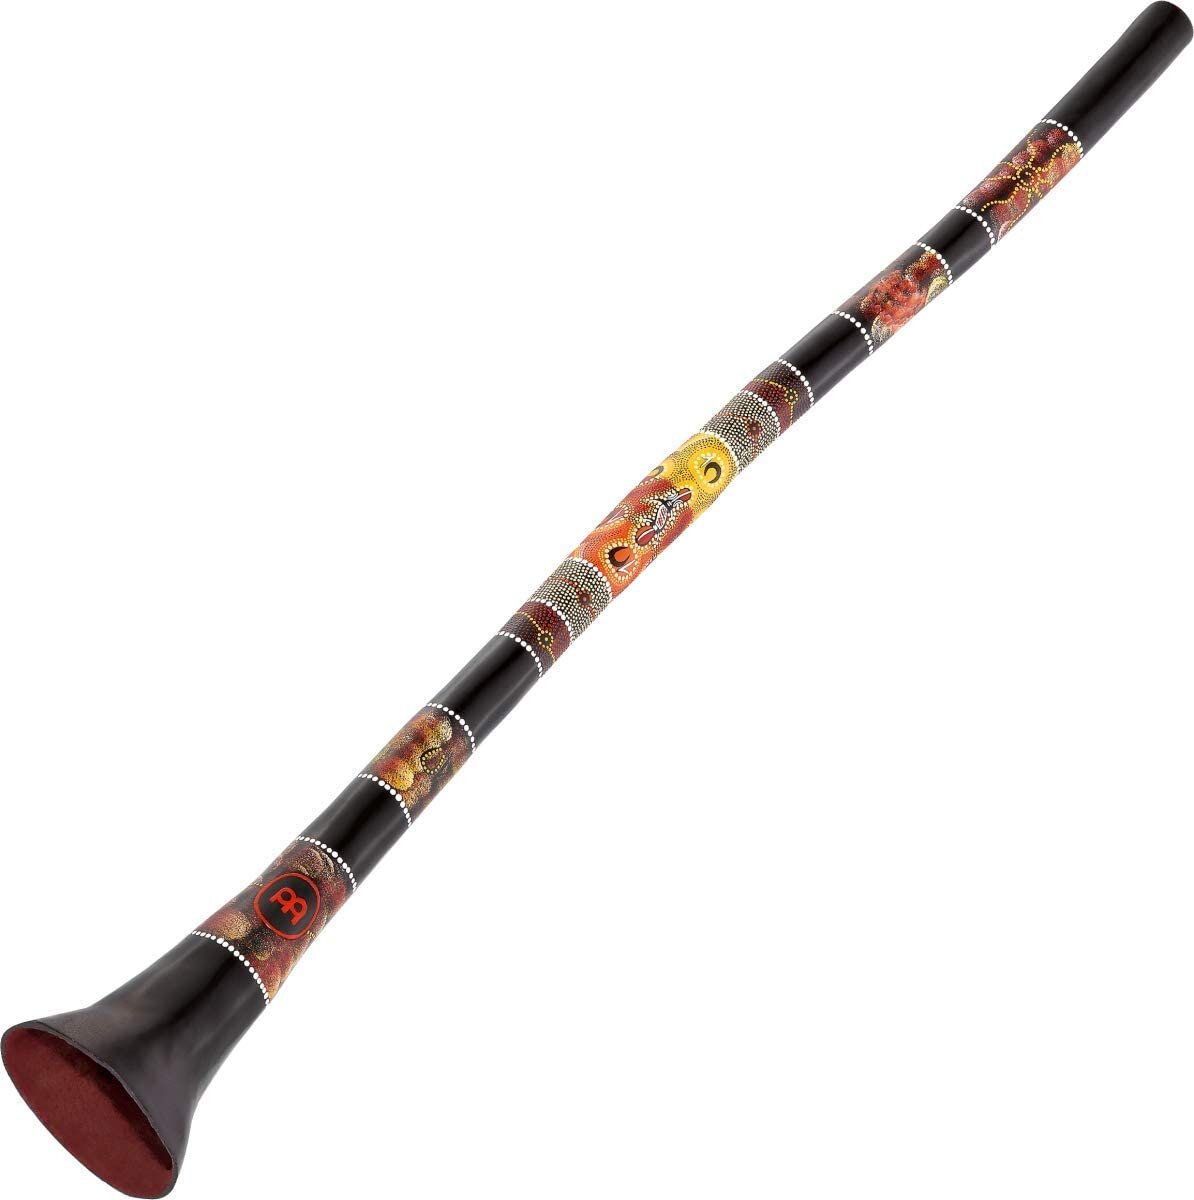 Meinl Didgeridoo Fiber Professionnal black (PROFDDG1-BK) : photo 1